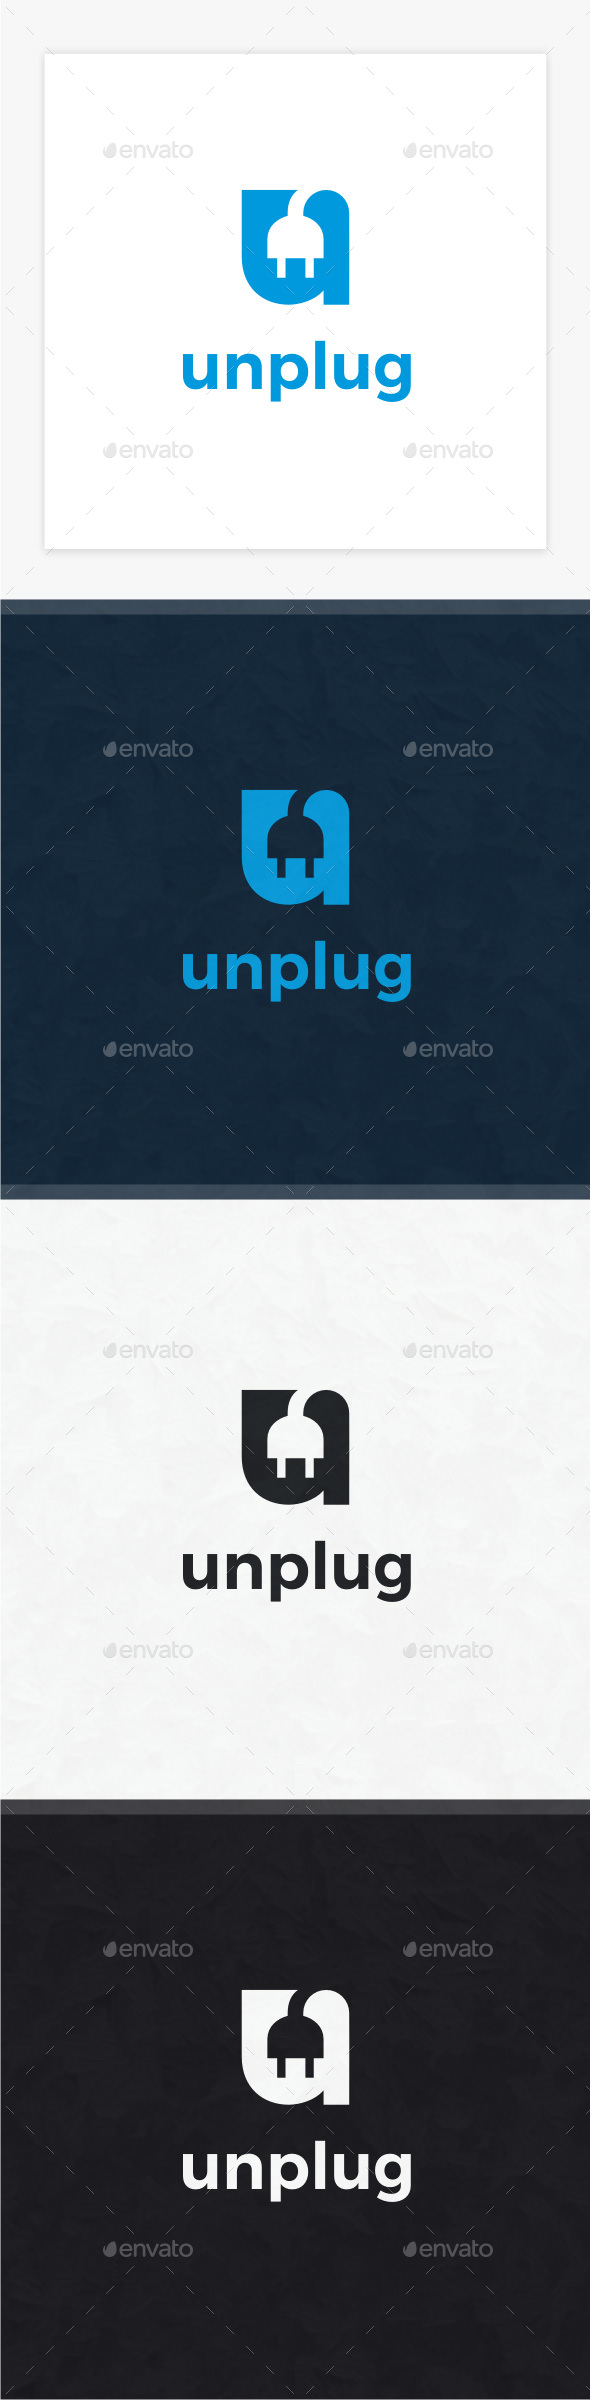 Unplug - Letter U Logo